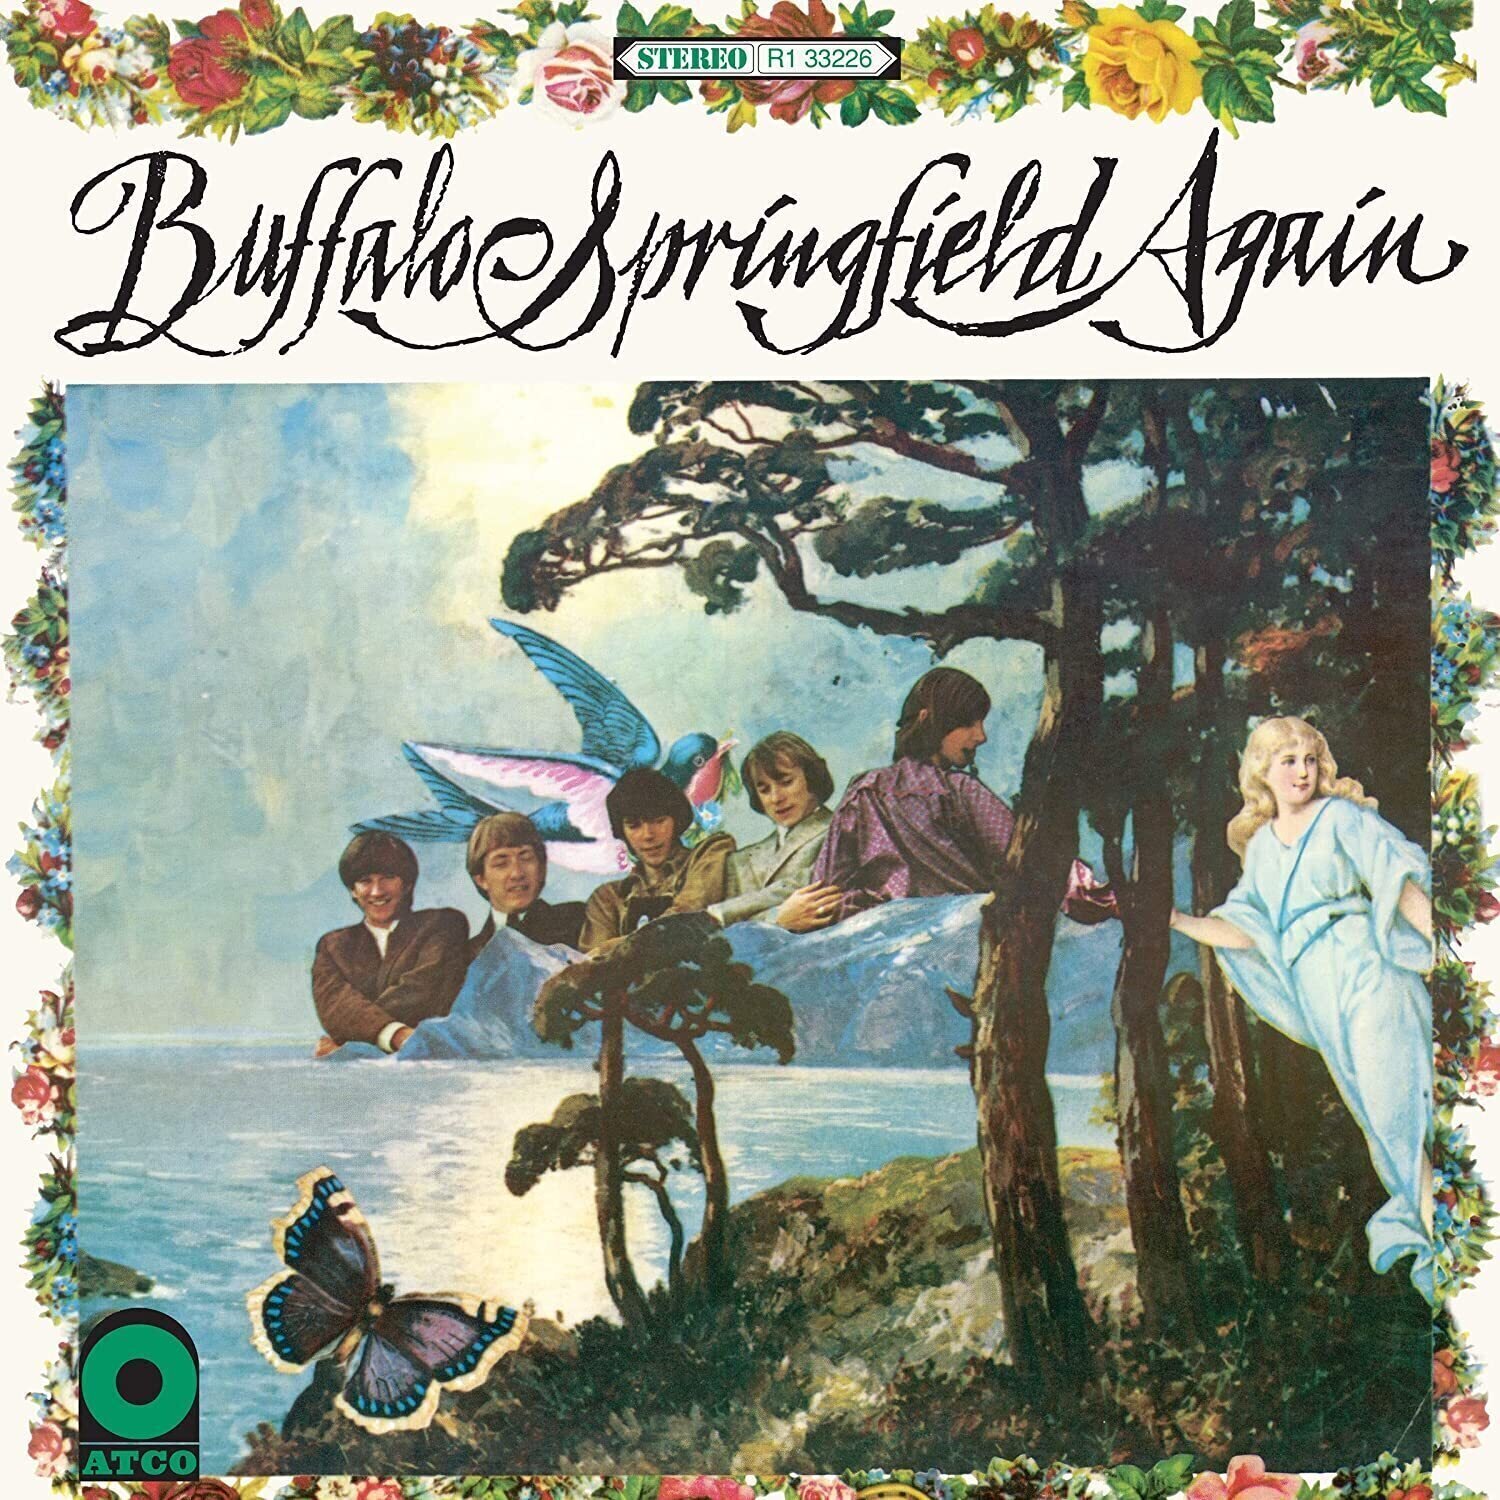 Hanglemez Buffalo Springfield - Buffalo Springfield Again (LP)